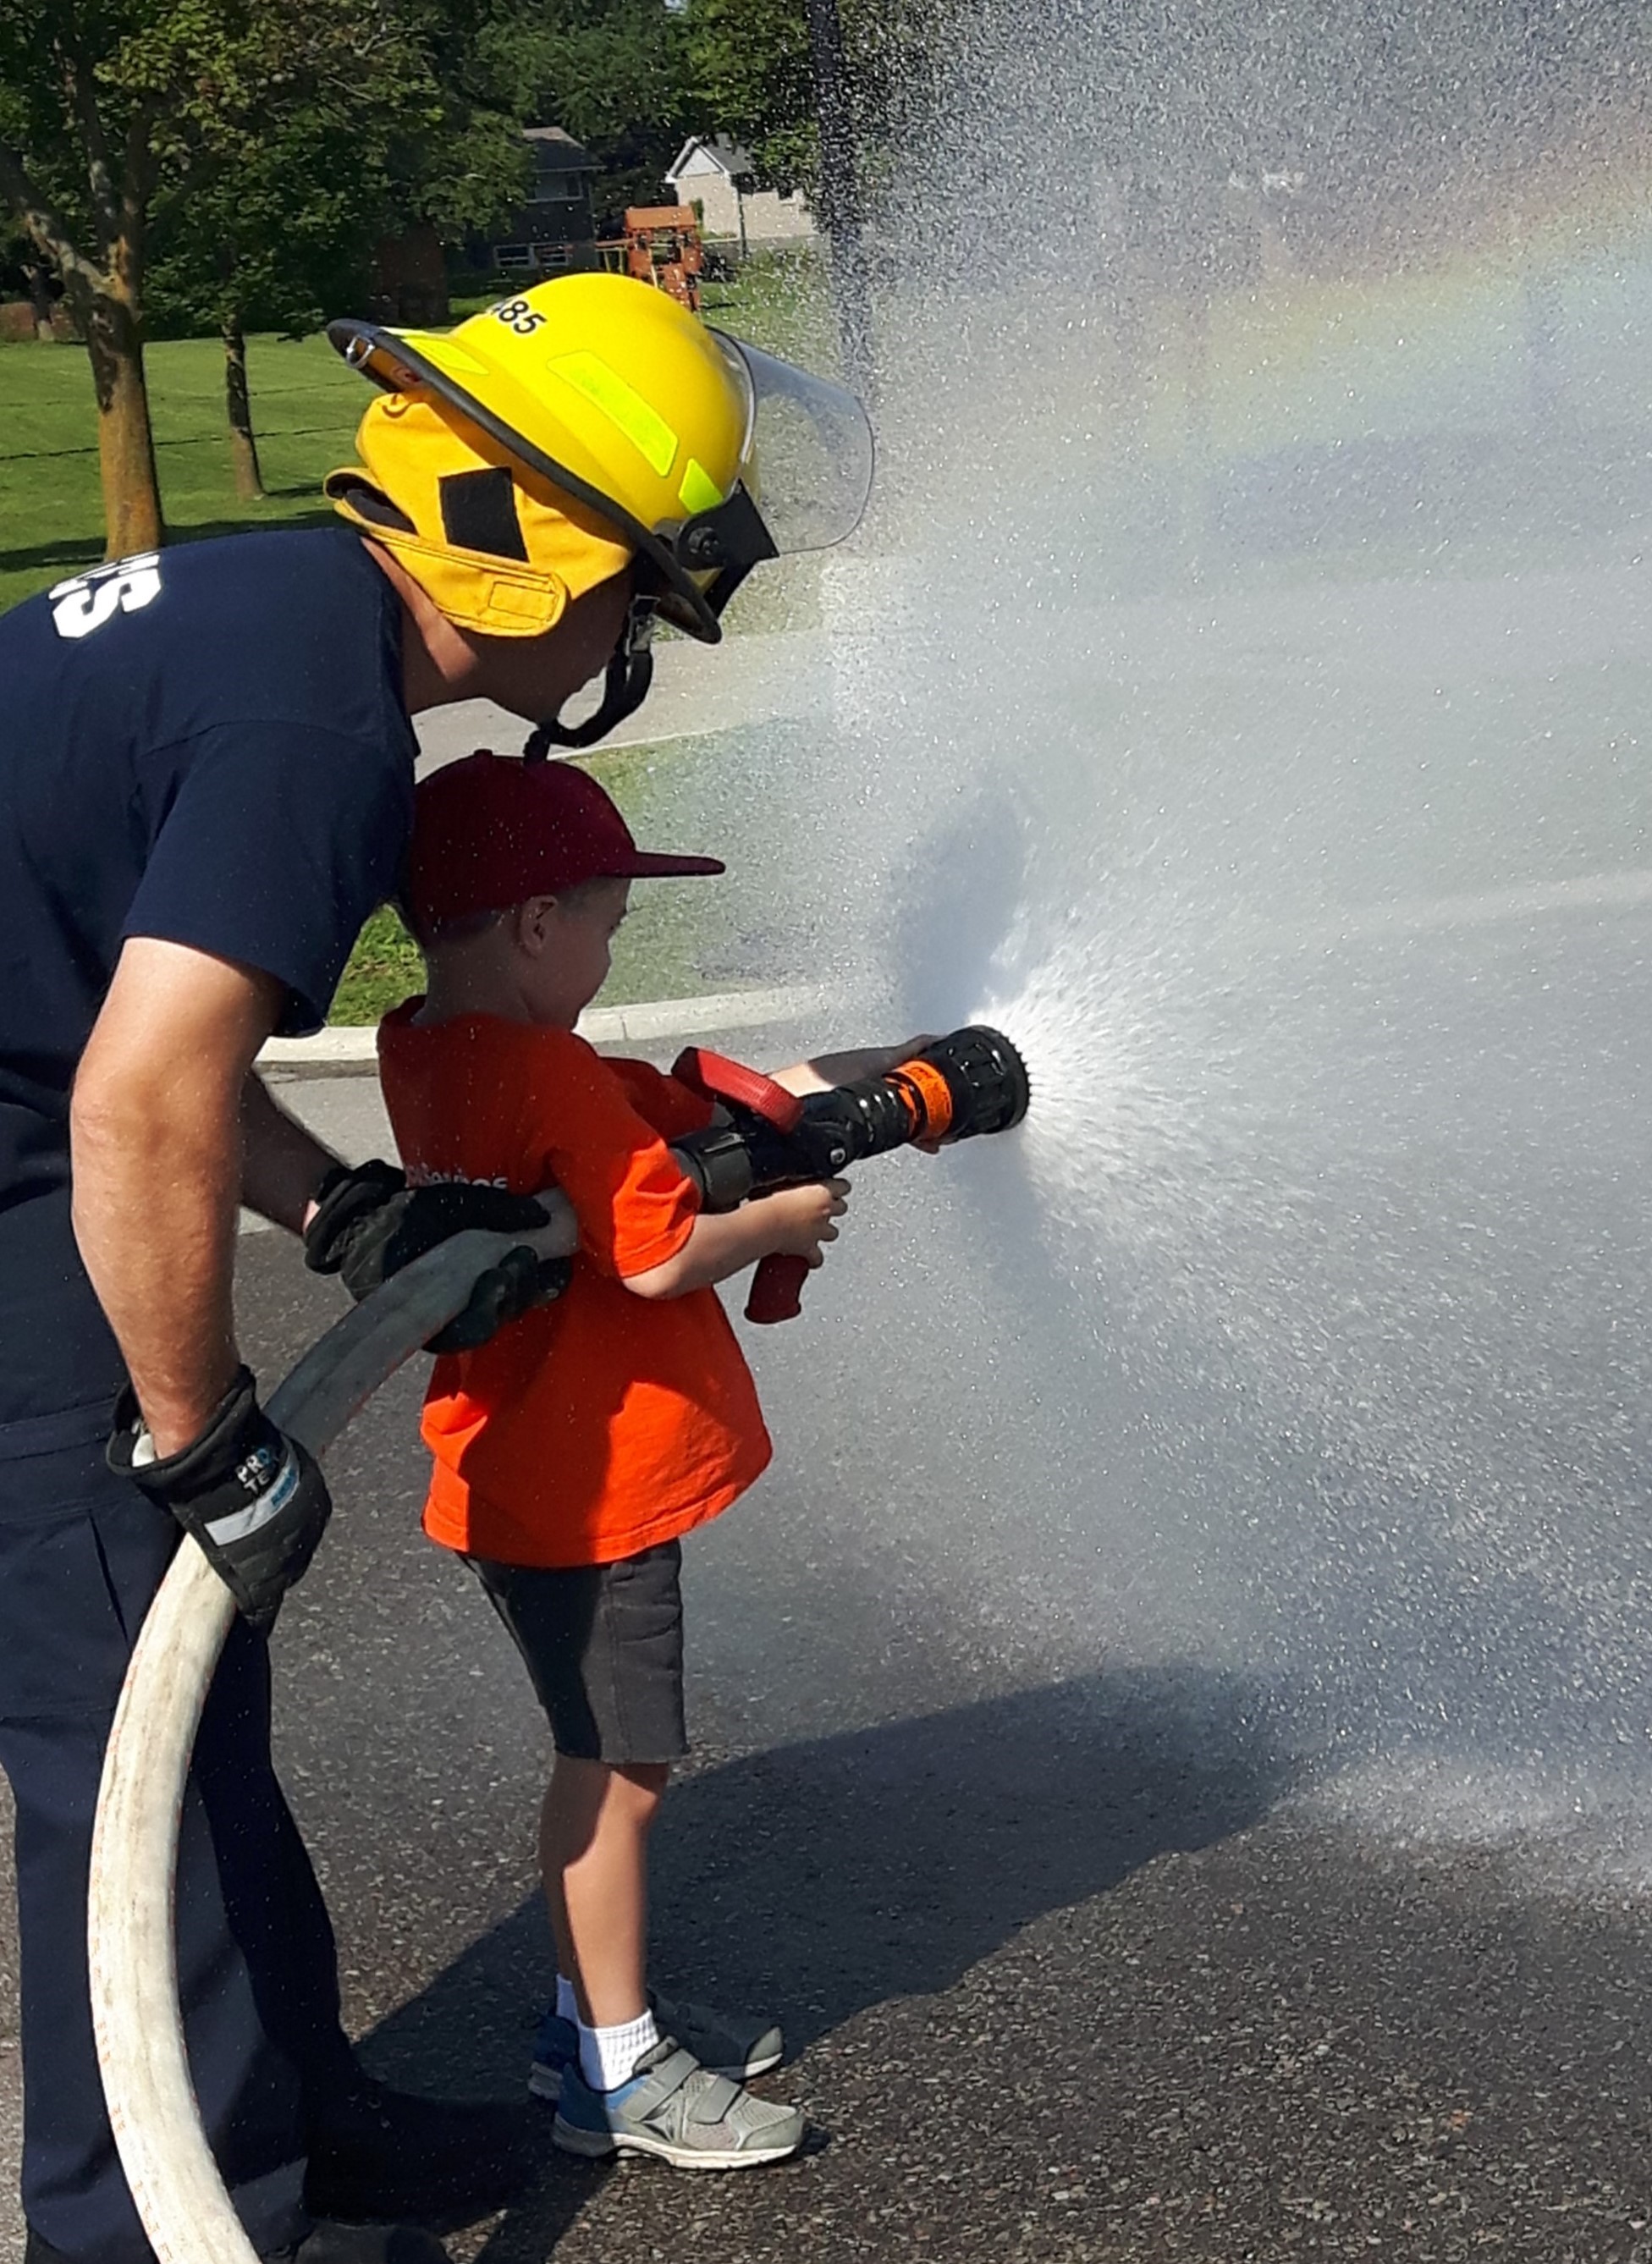 A firefighter demonstrates using a fire hose.